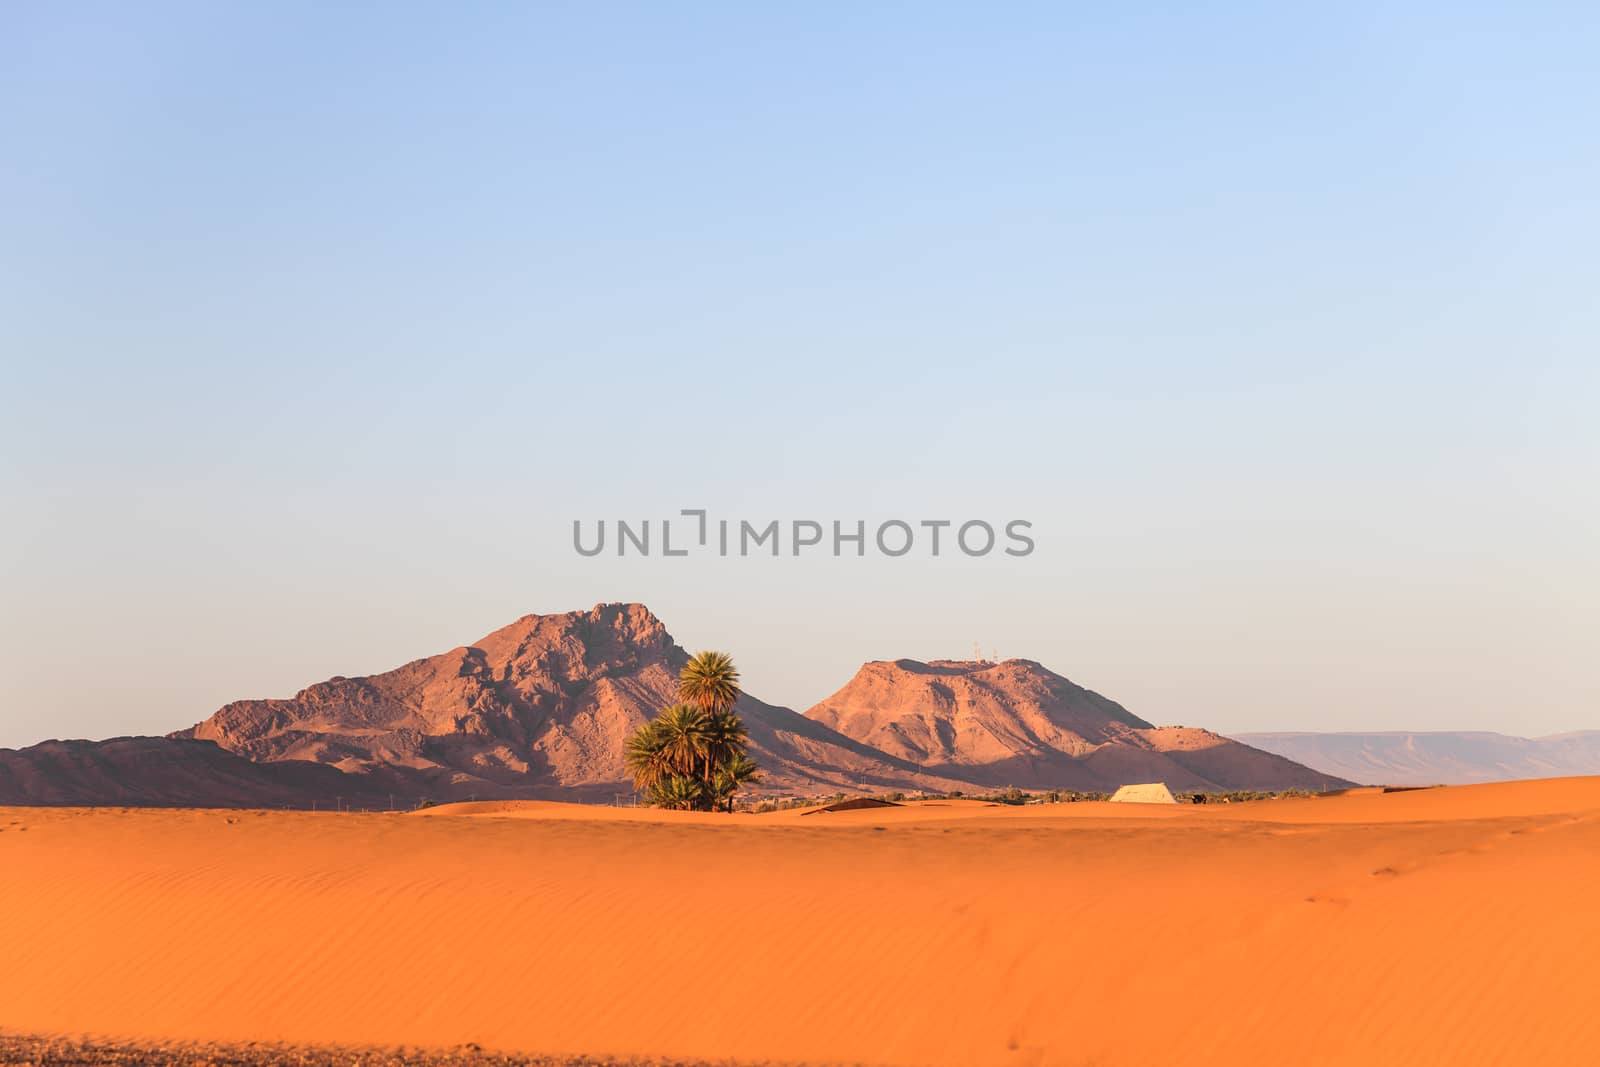 Sahara desert by takepicsforfun